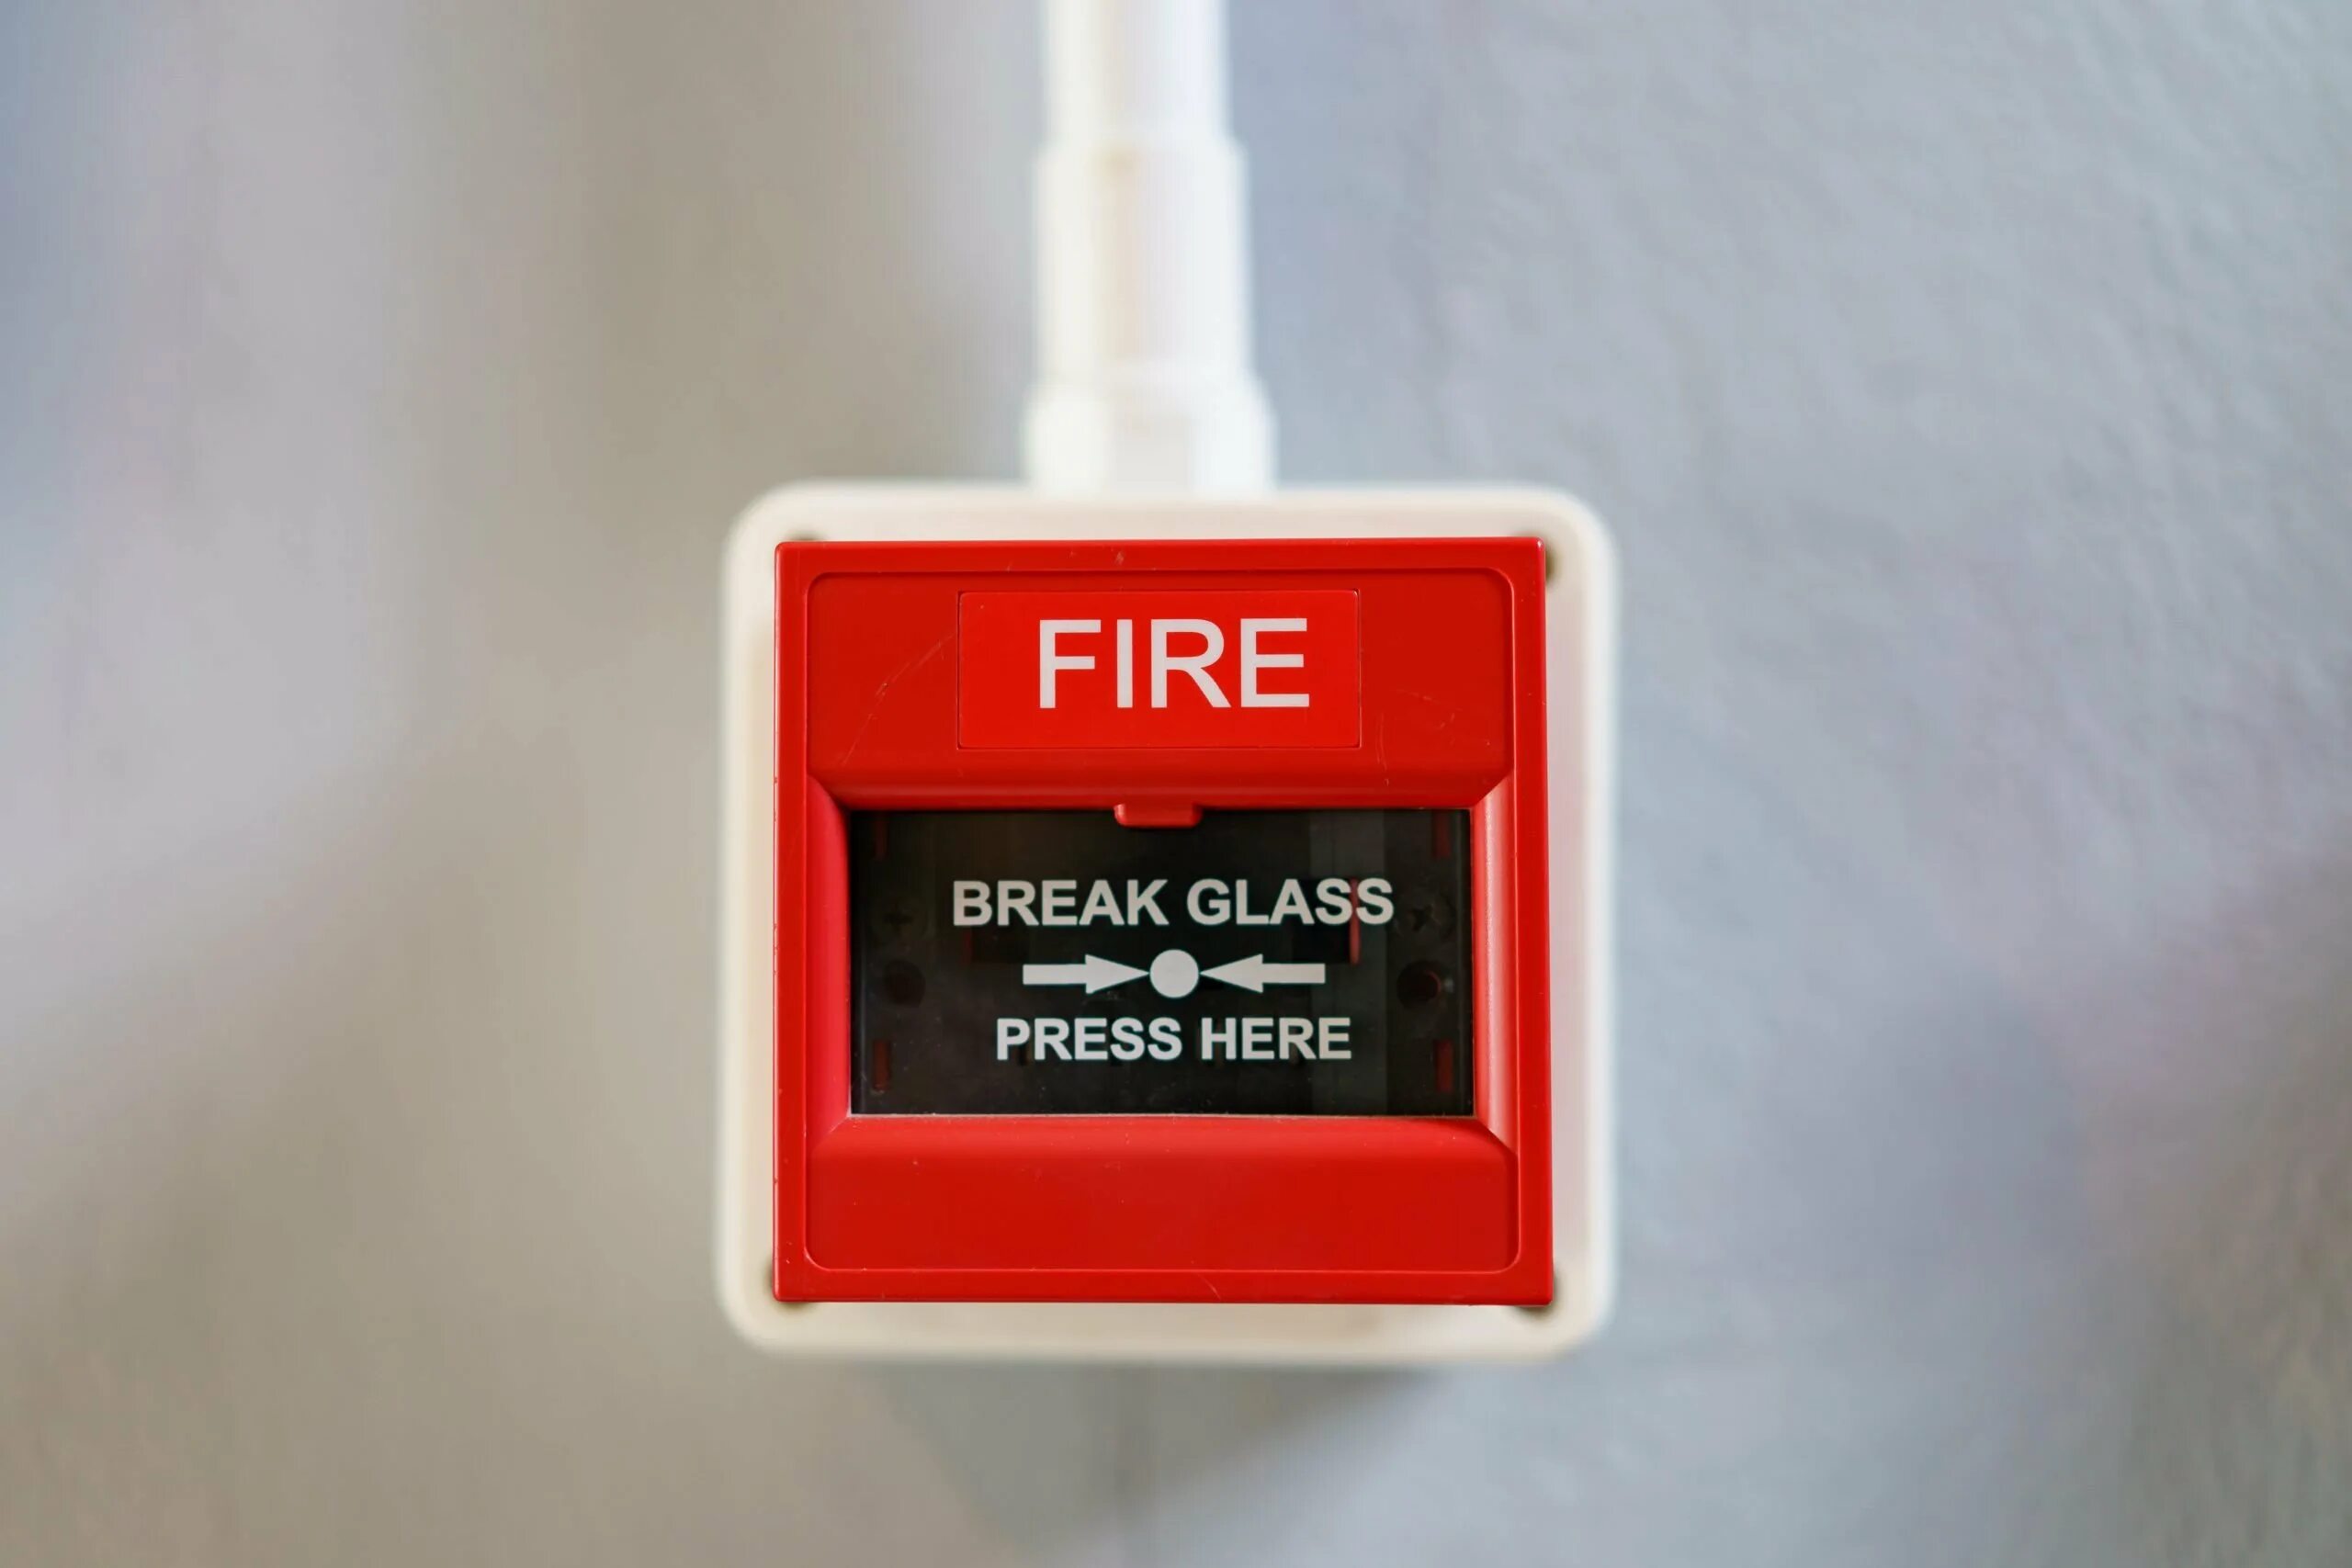 Пожарная сигнализация красная. Красная коробка для пожарной сигнализации. Пожарная кнопка. Система пожарной сигнализации.